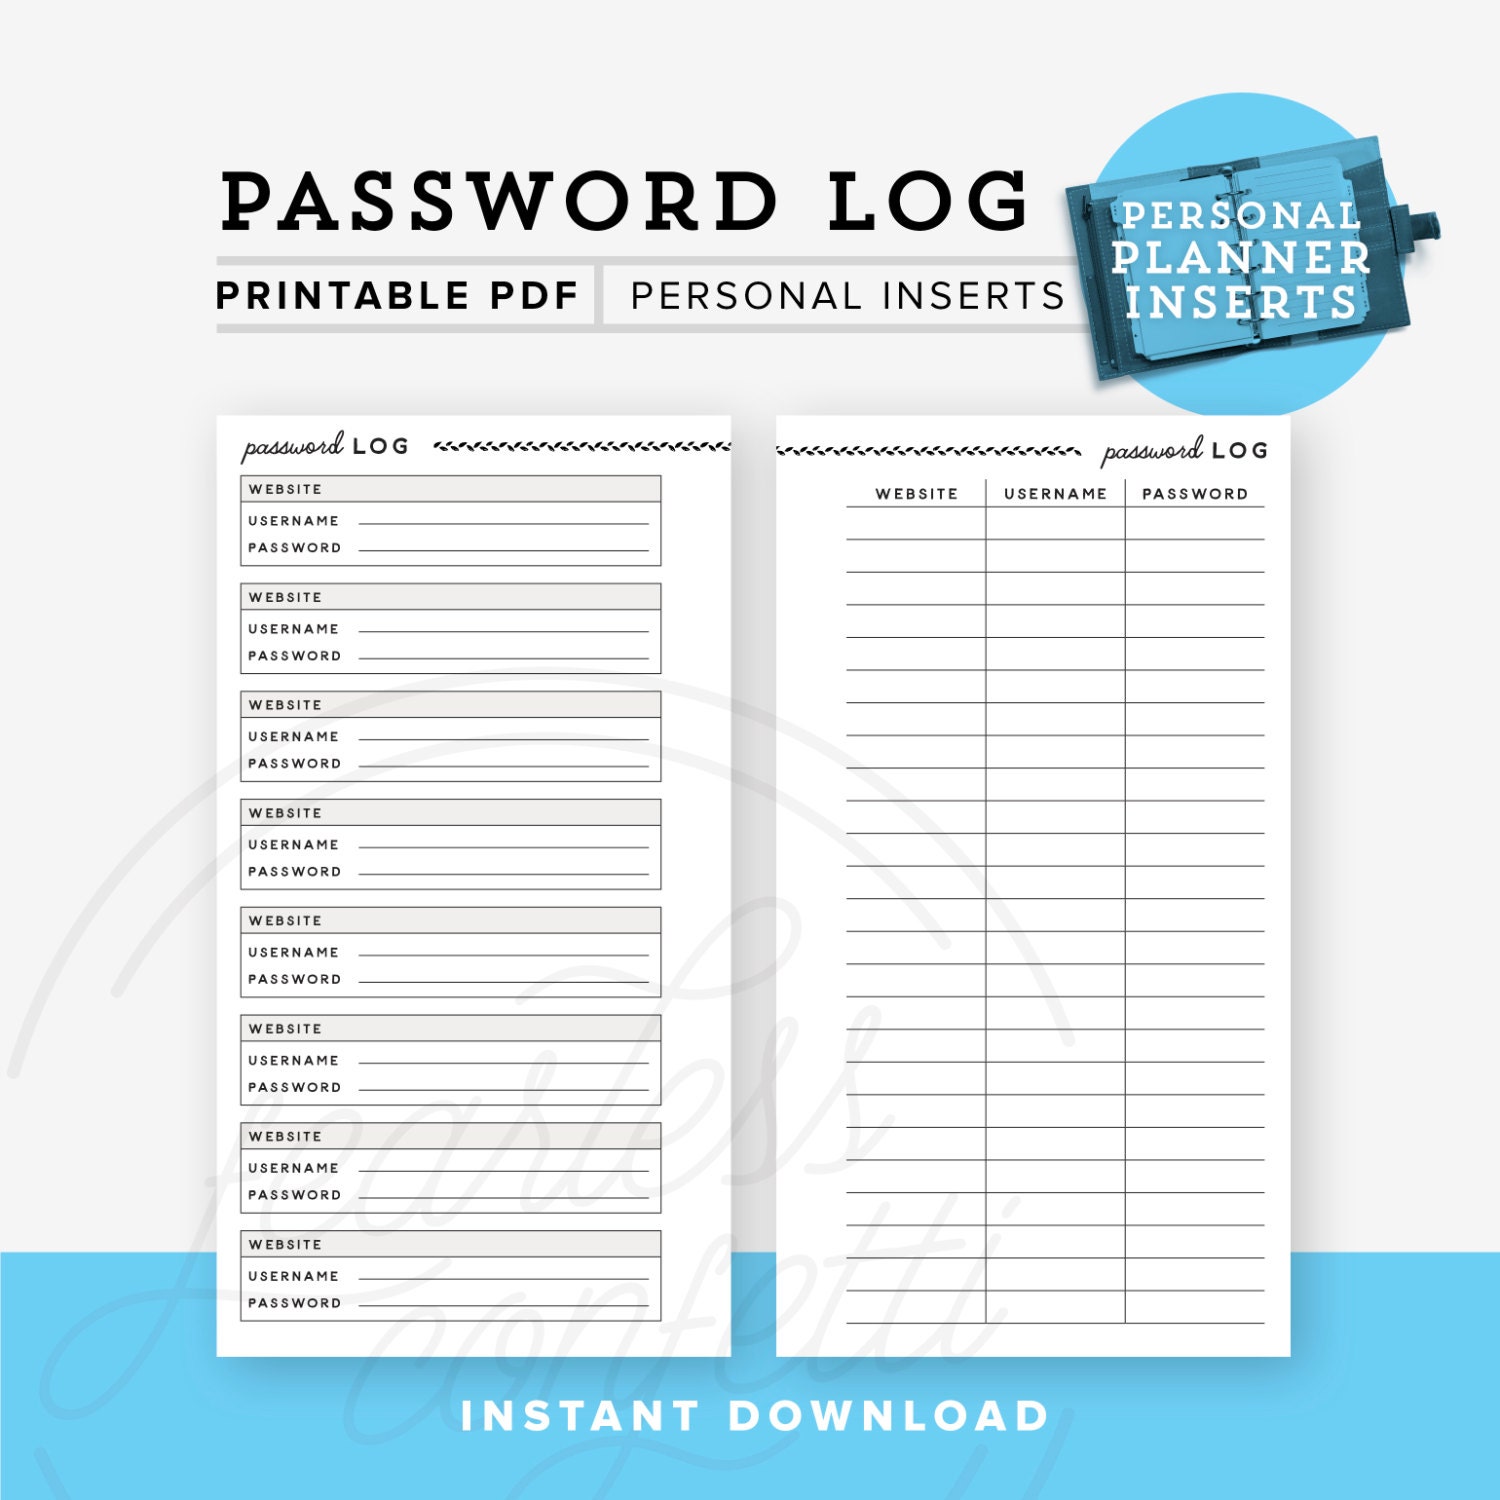 Password Log Personal Planner Printable Personal planner